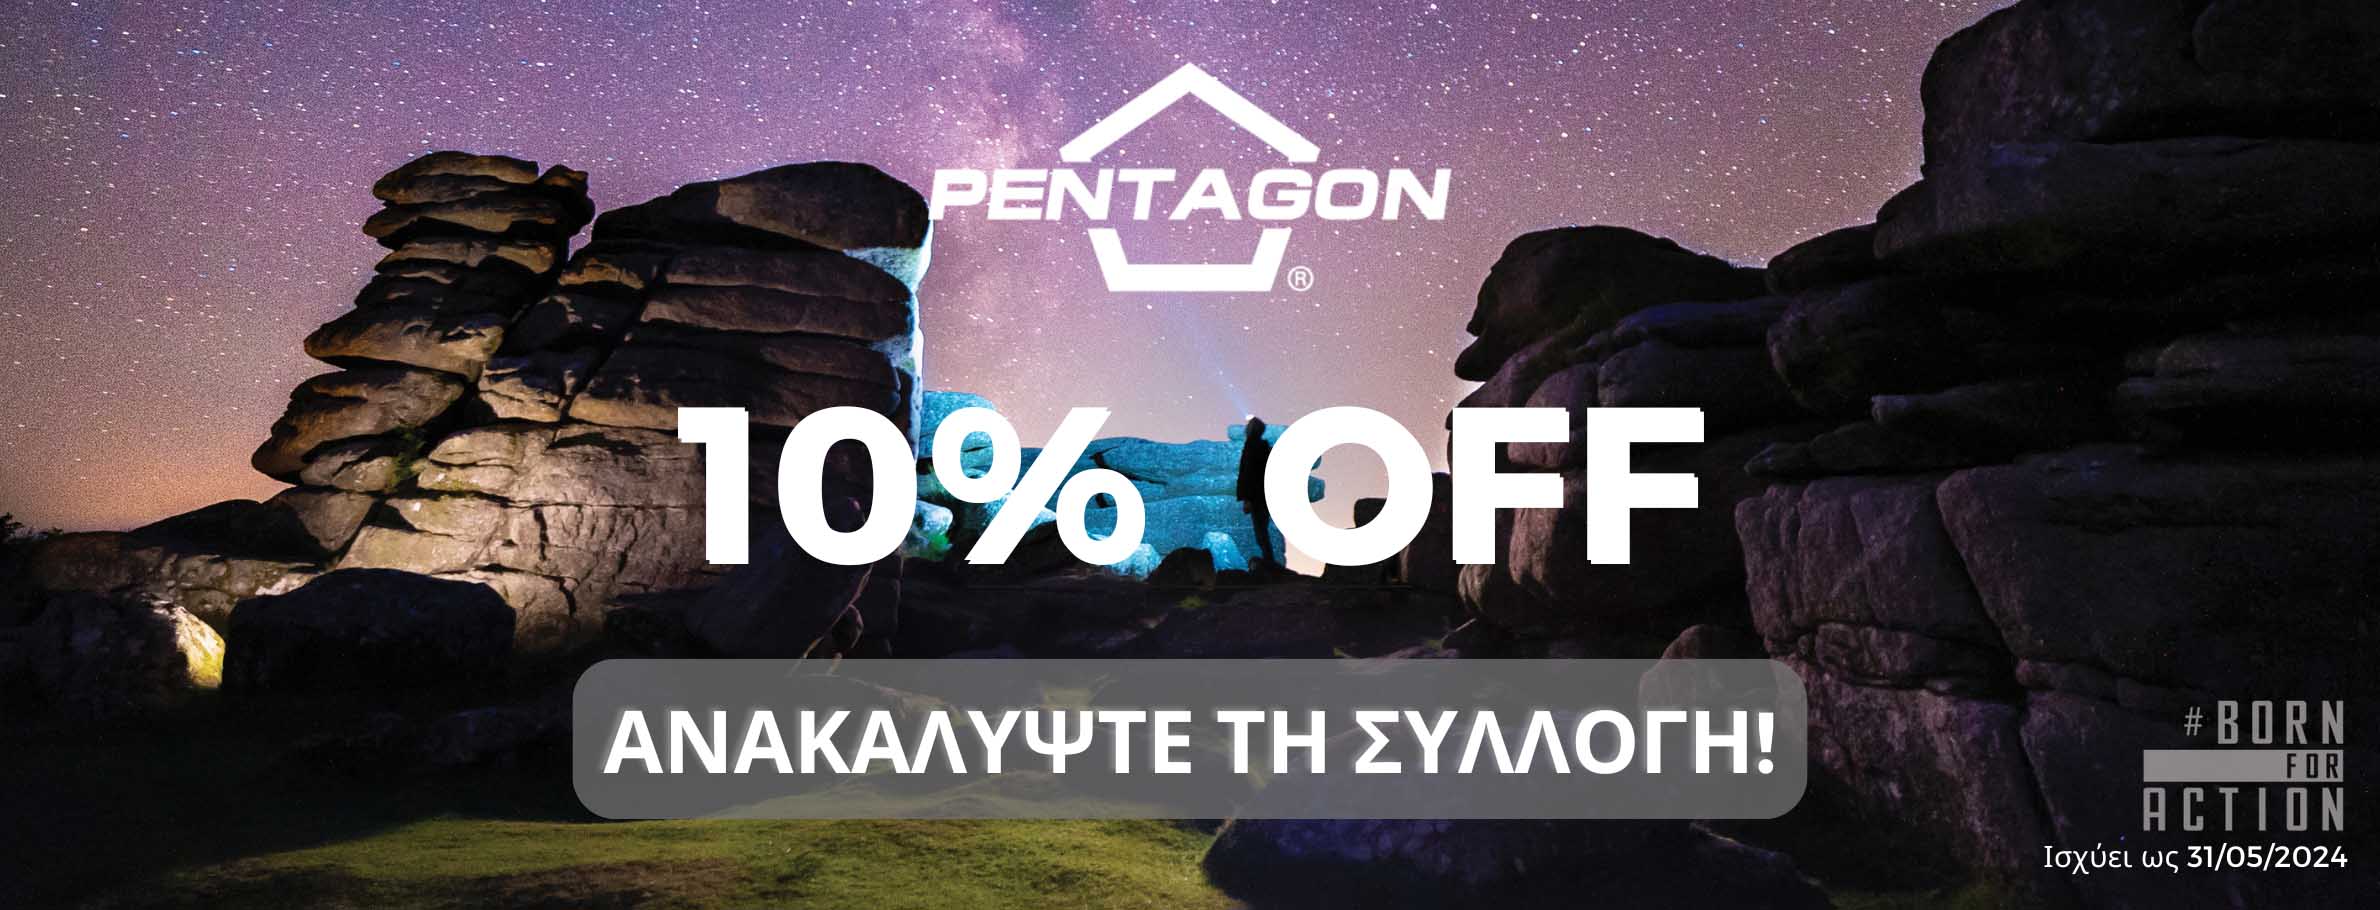 pentagon-discount